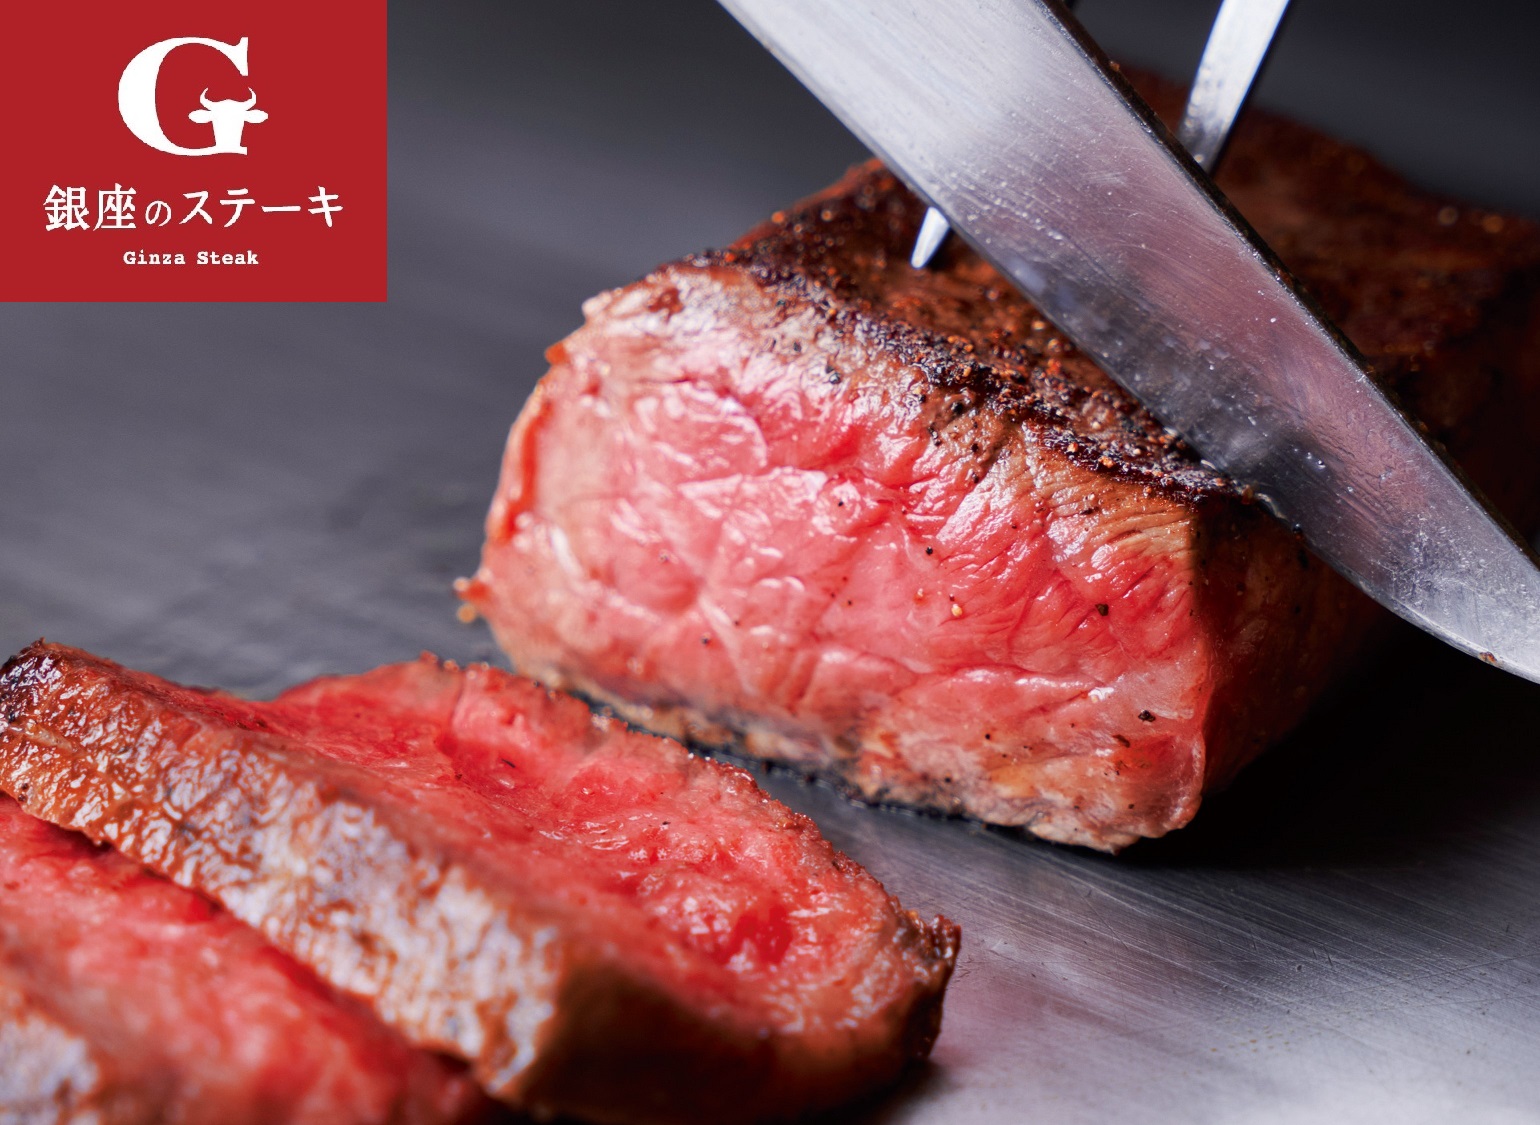 Meat Meets Music フェス Saitama 21 へ初出店決定 銀座のステーキ うに 黒毛和牛の最強コンビ 株式会社ベルーナのプレスリリース